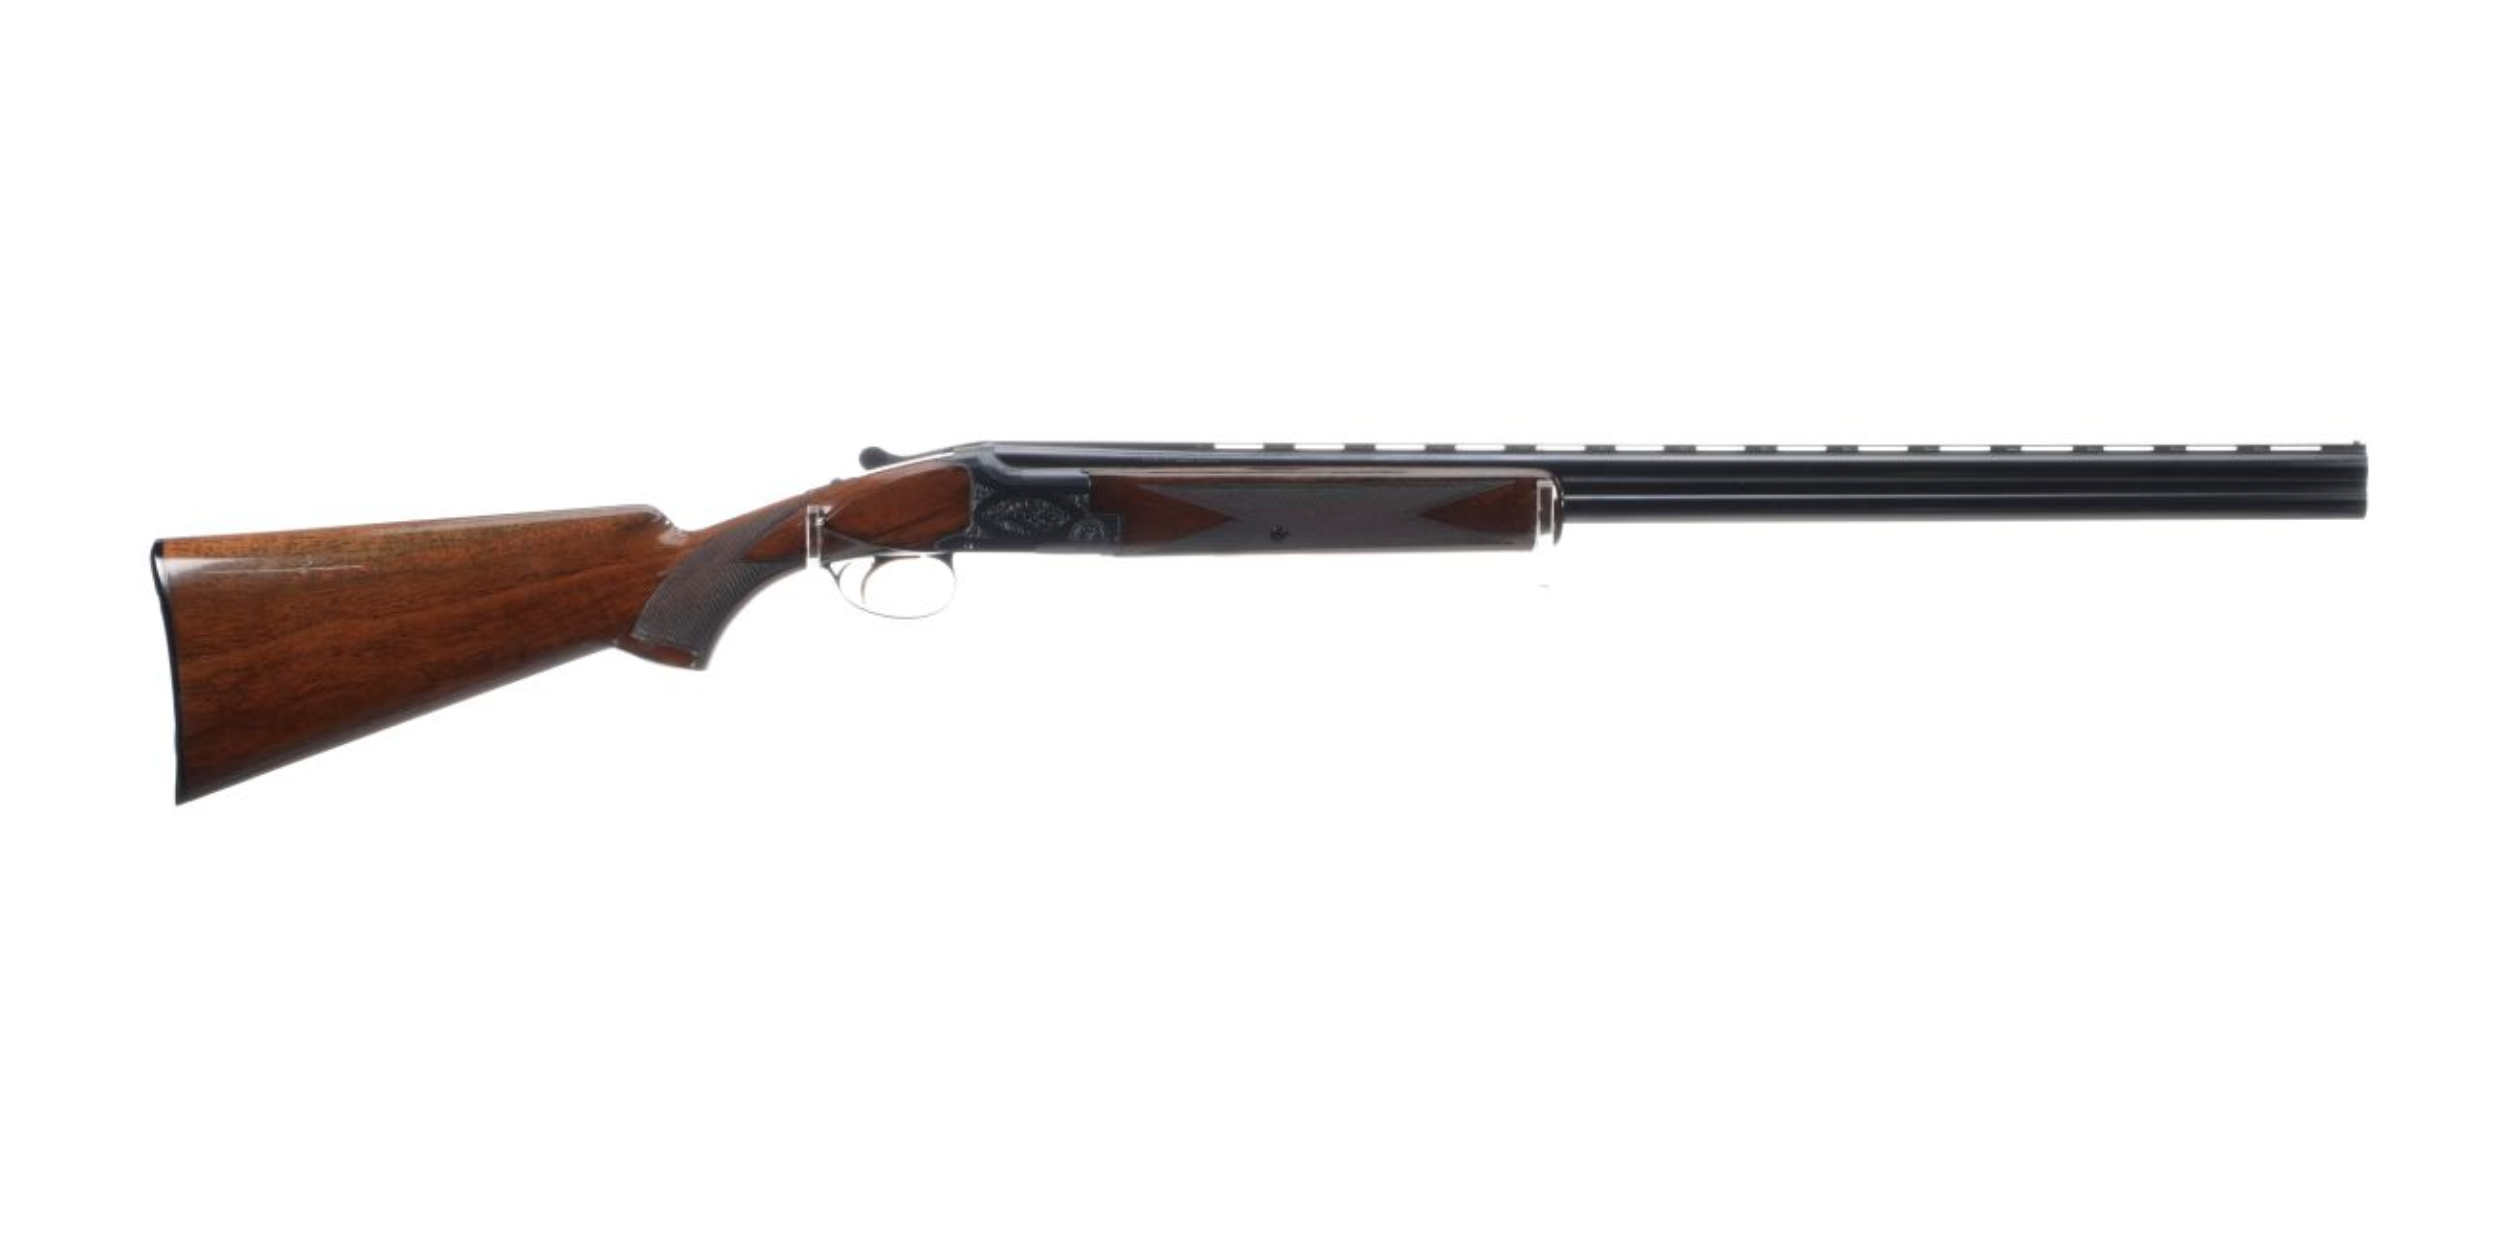 Browning hunting shotgun on a white background.